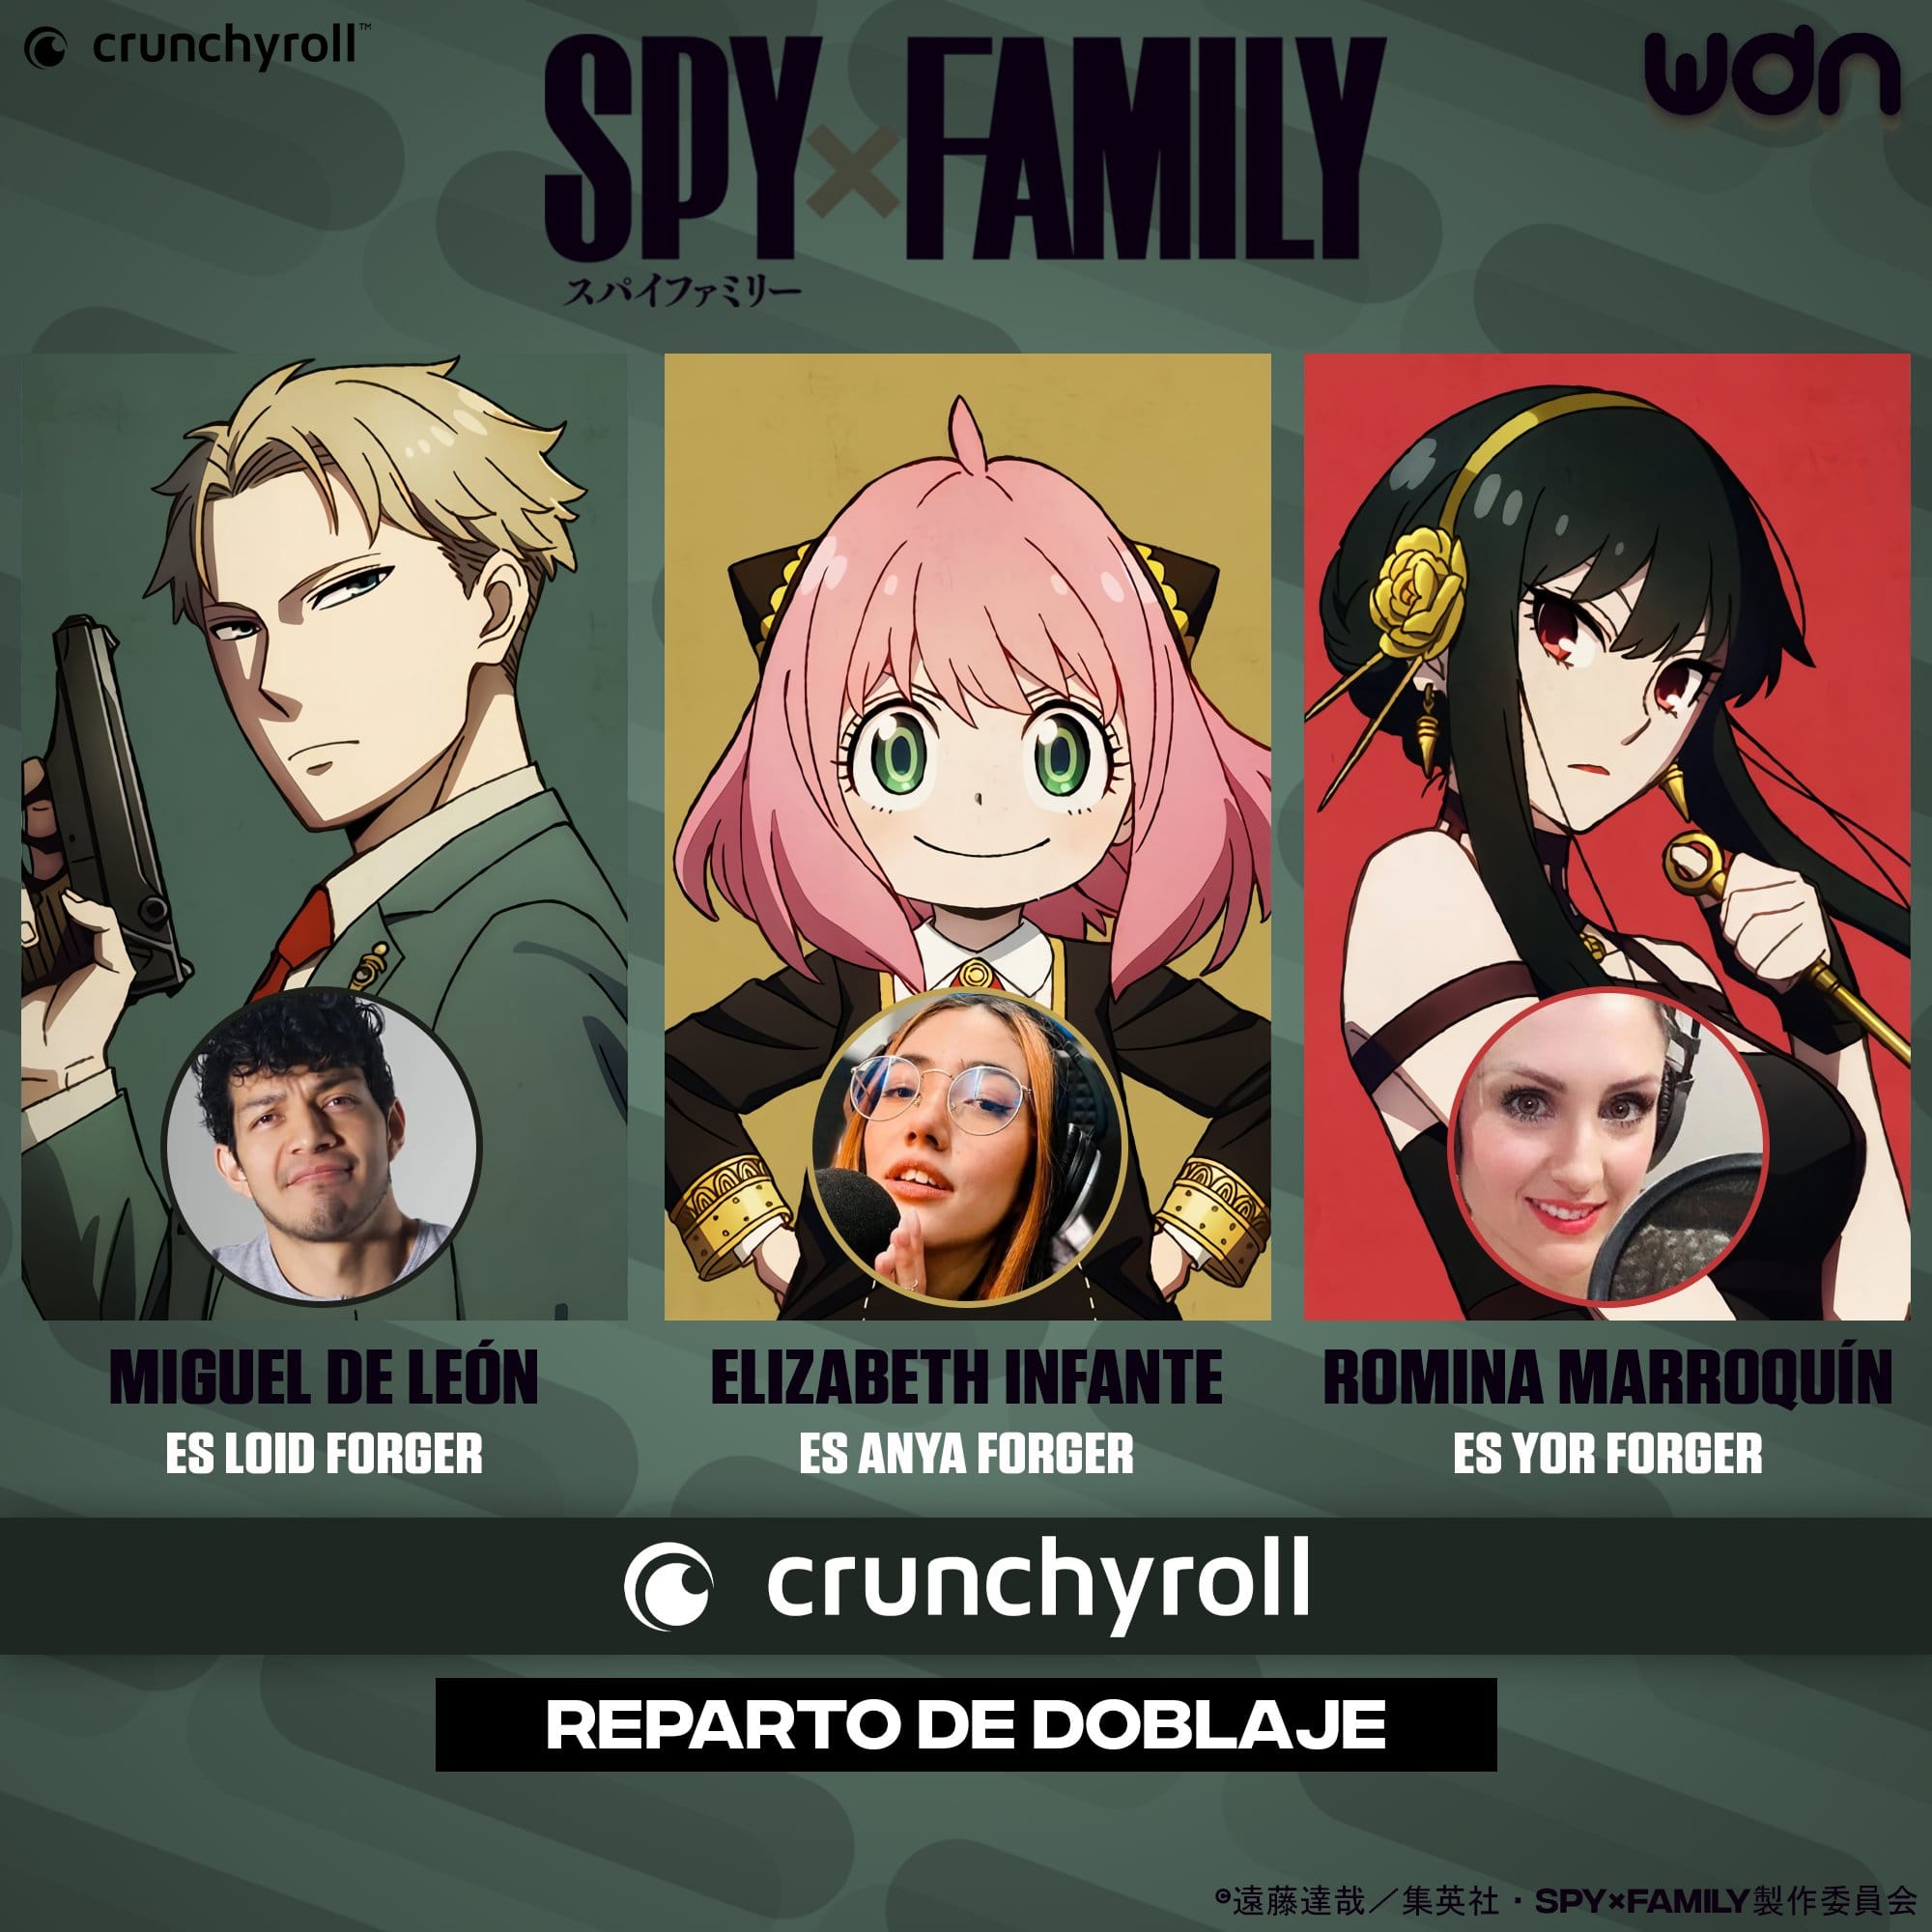 SPY x FAMILY, Kaguya-sama y más series tendrán doblaje al español latino